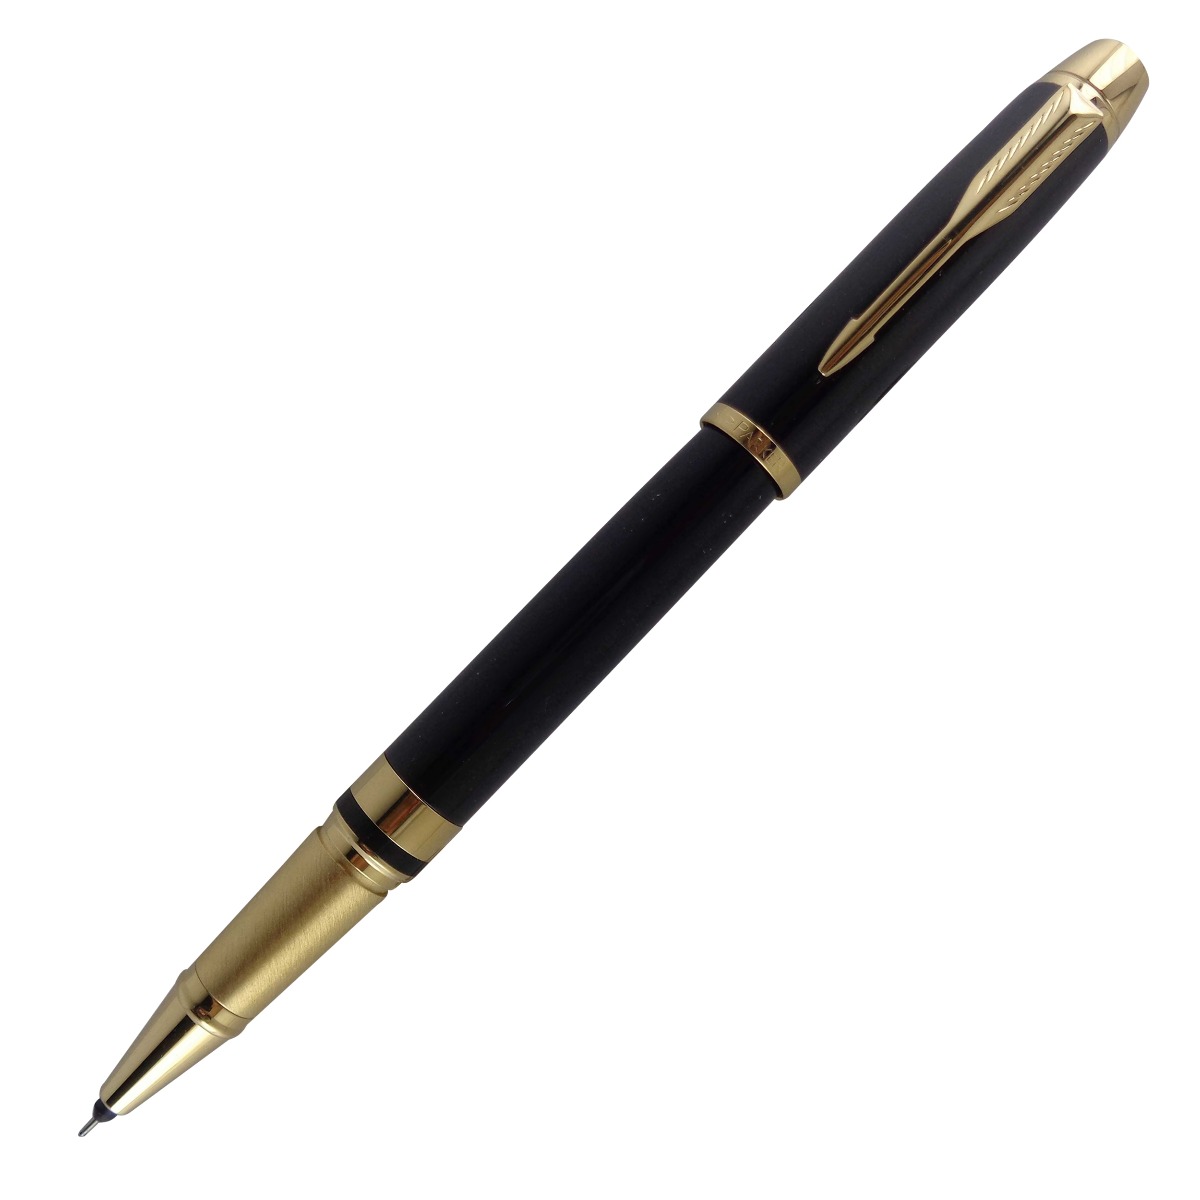 Parker Model: 14916 Odyssey Black color body with golden clip fine tip cap type roller ball